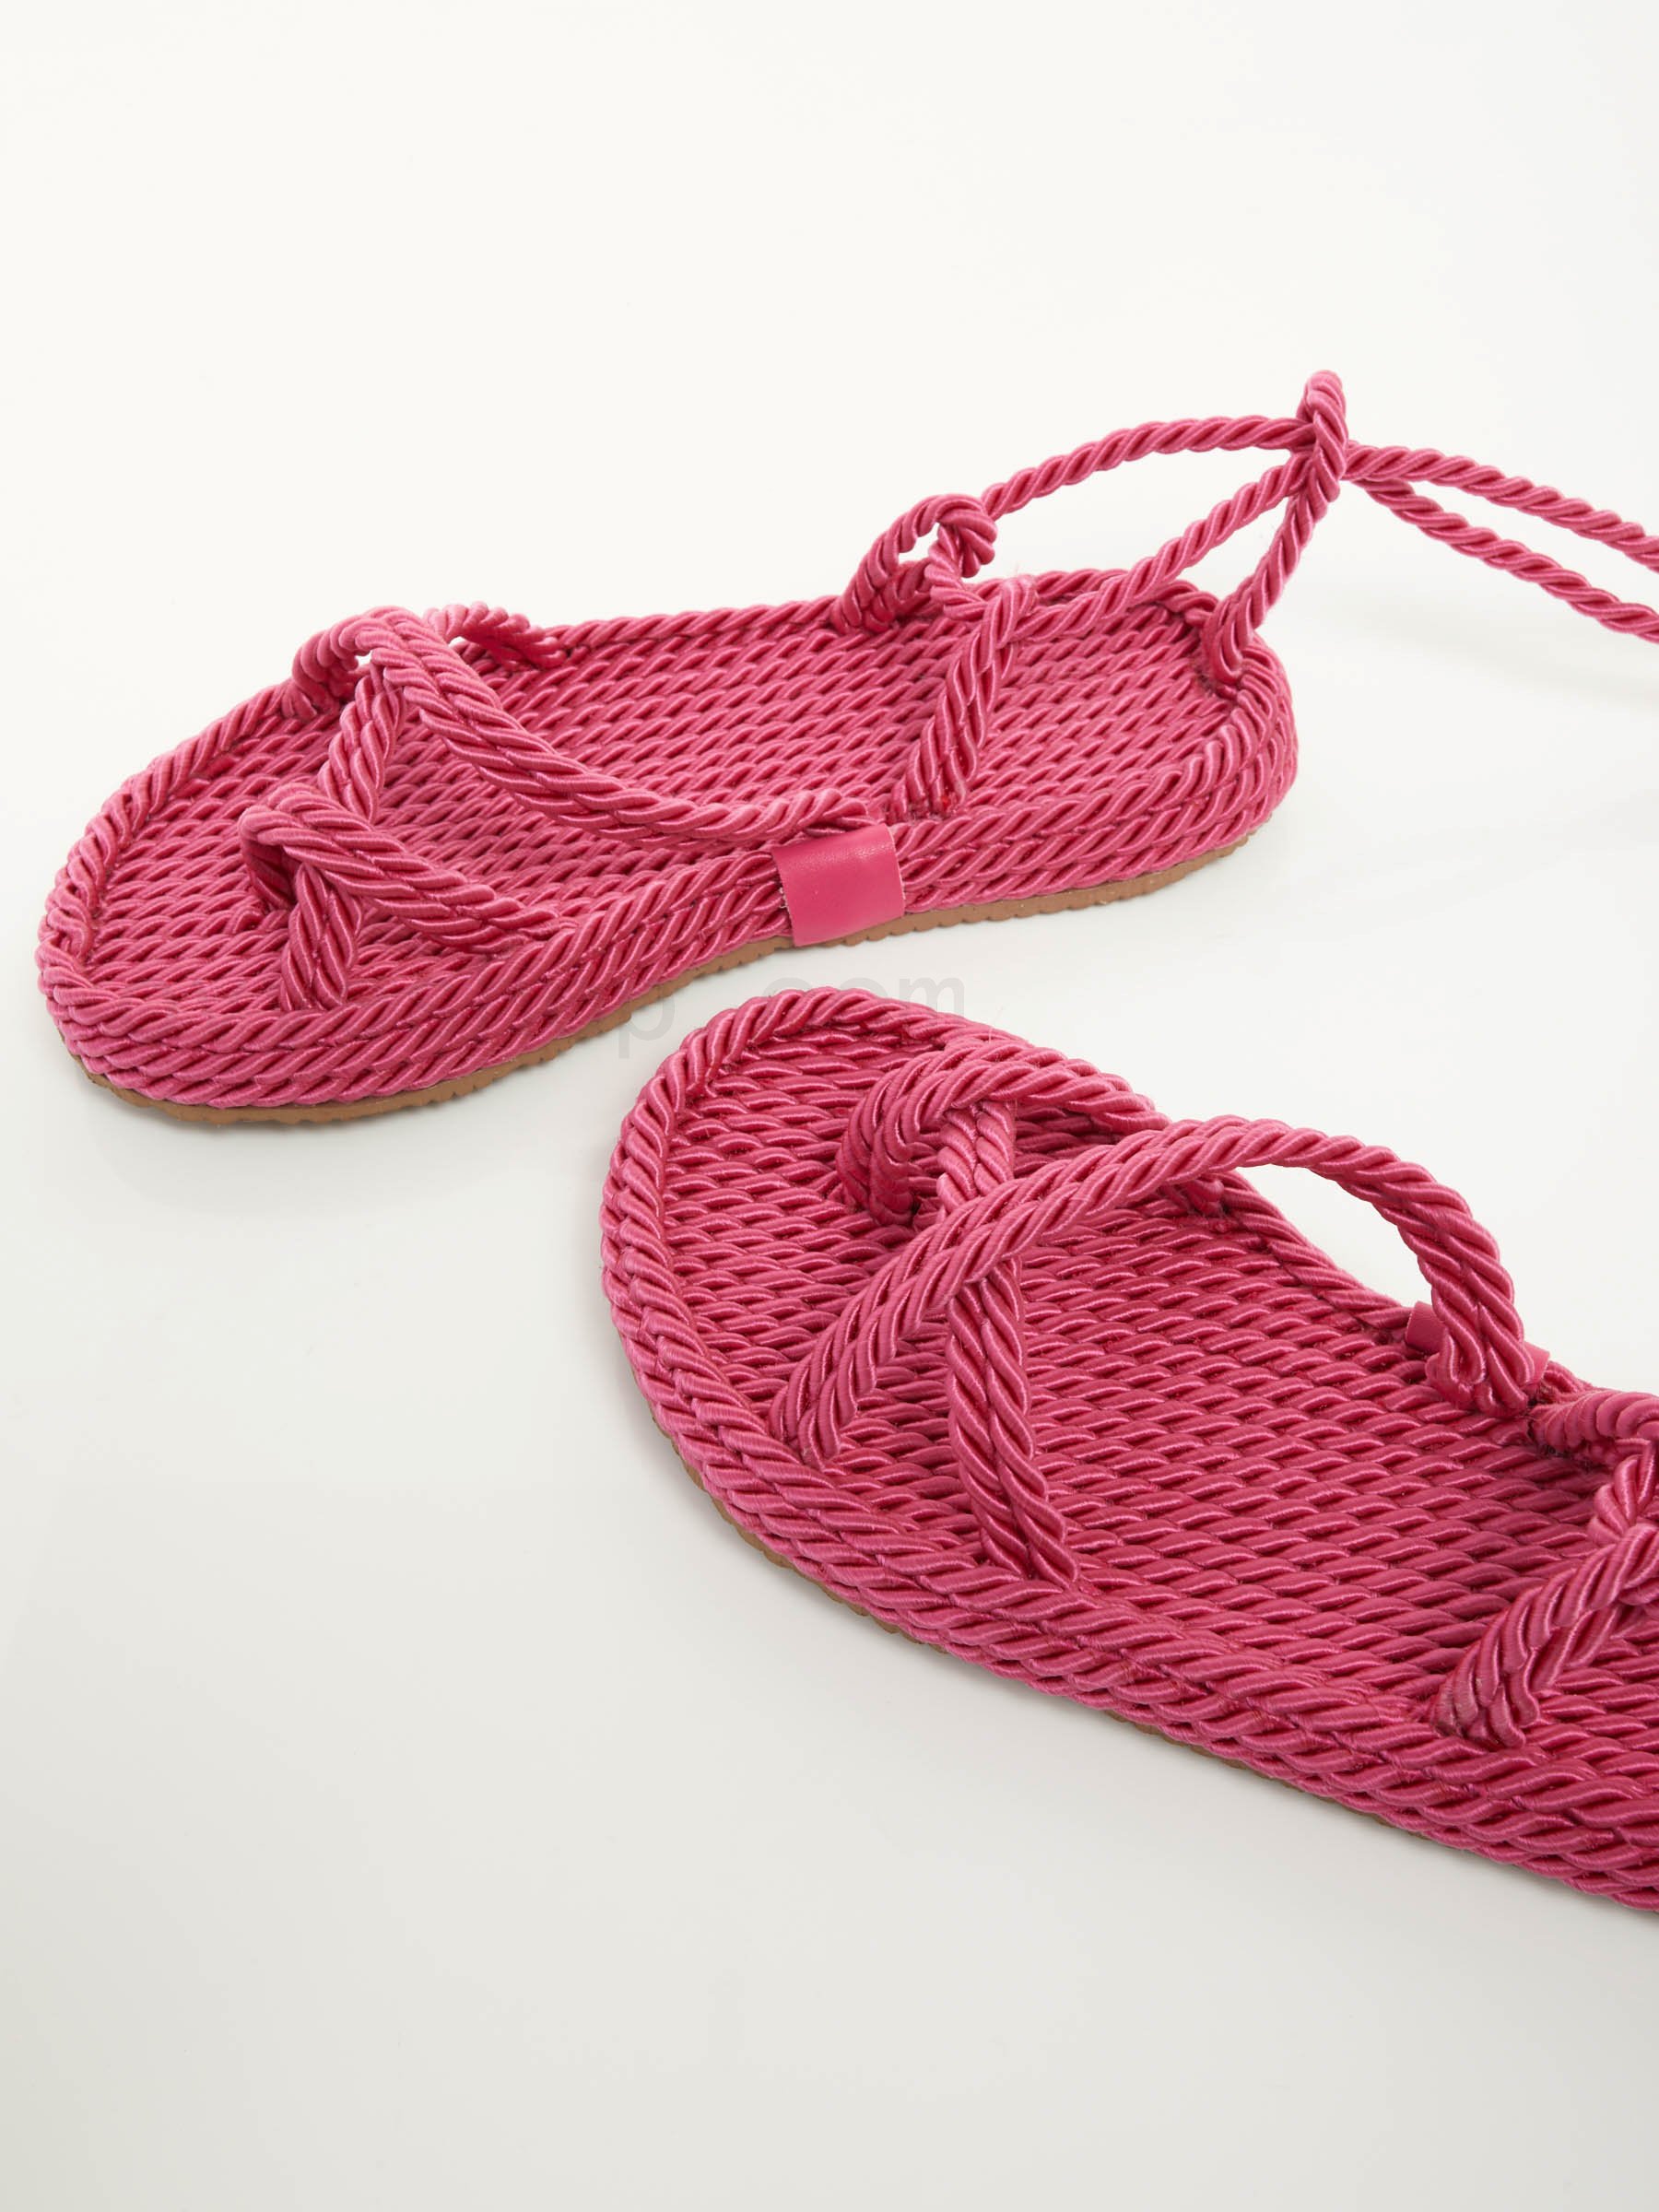 scarpe ovy&#232; saldi Rope Flat Sandals F0817885-0692